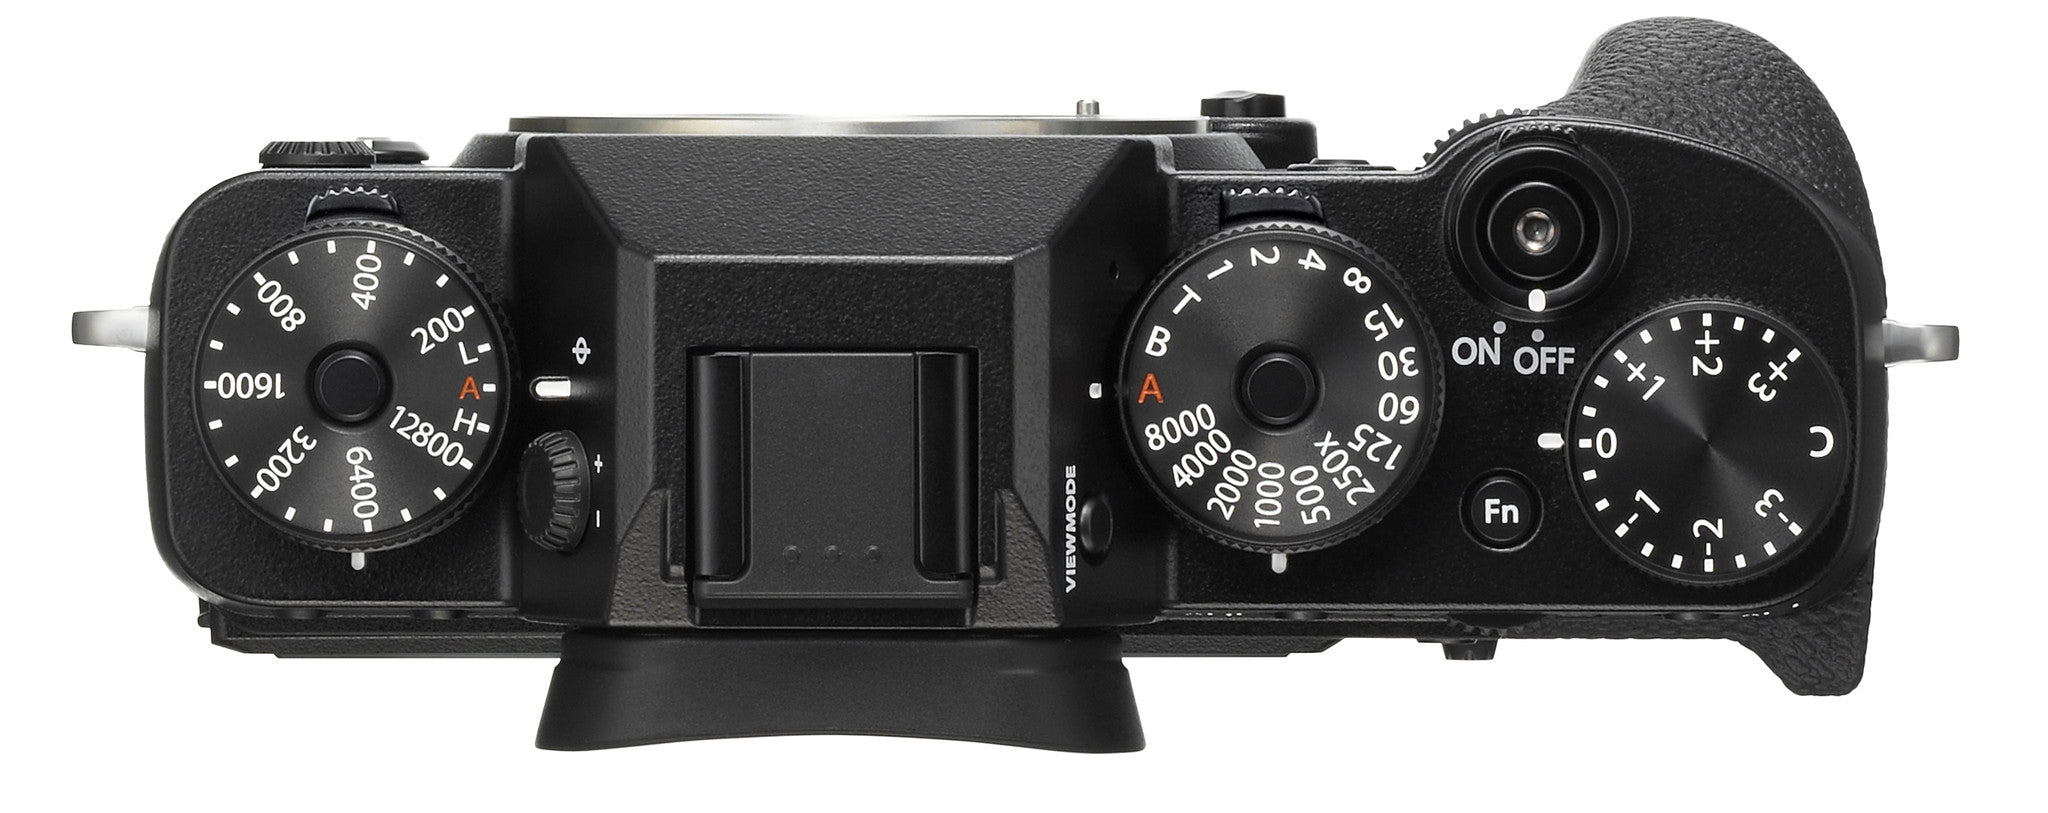 Fujifilm X-T2 Digital Camera Body (Black), camera mirrorless cameras, Fujifilm - Pictureline  - 3